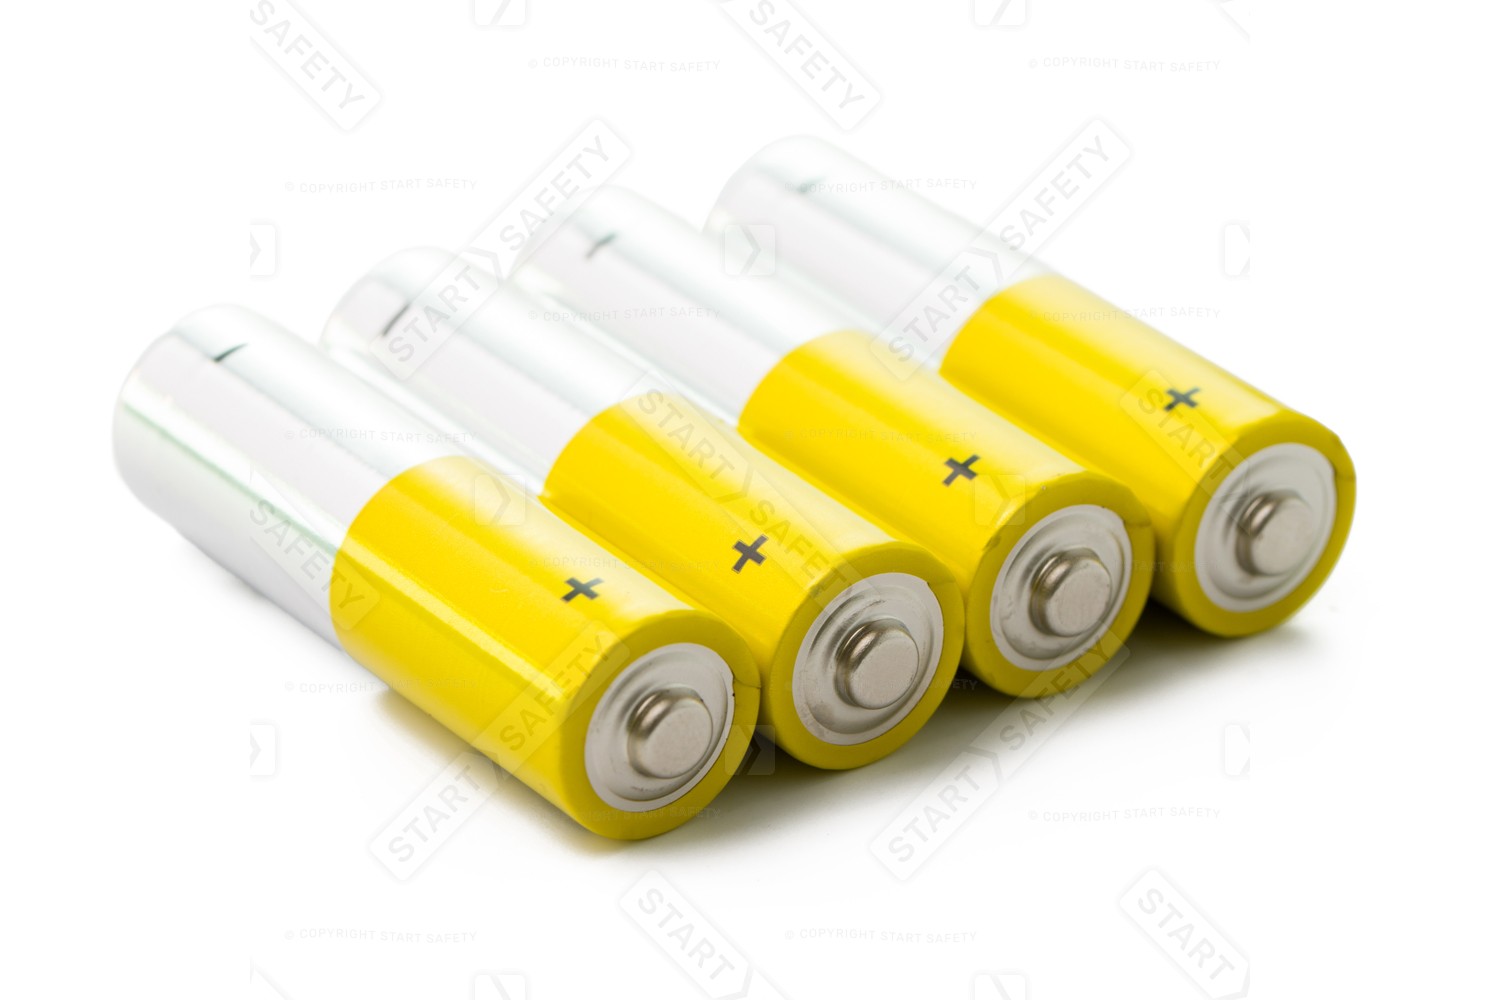 Triple-A Batteries